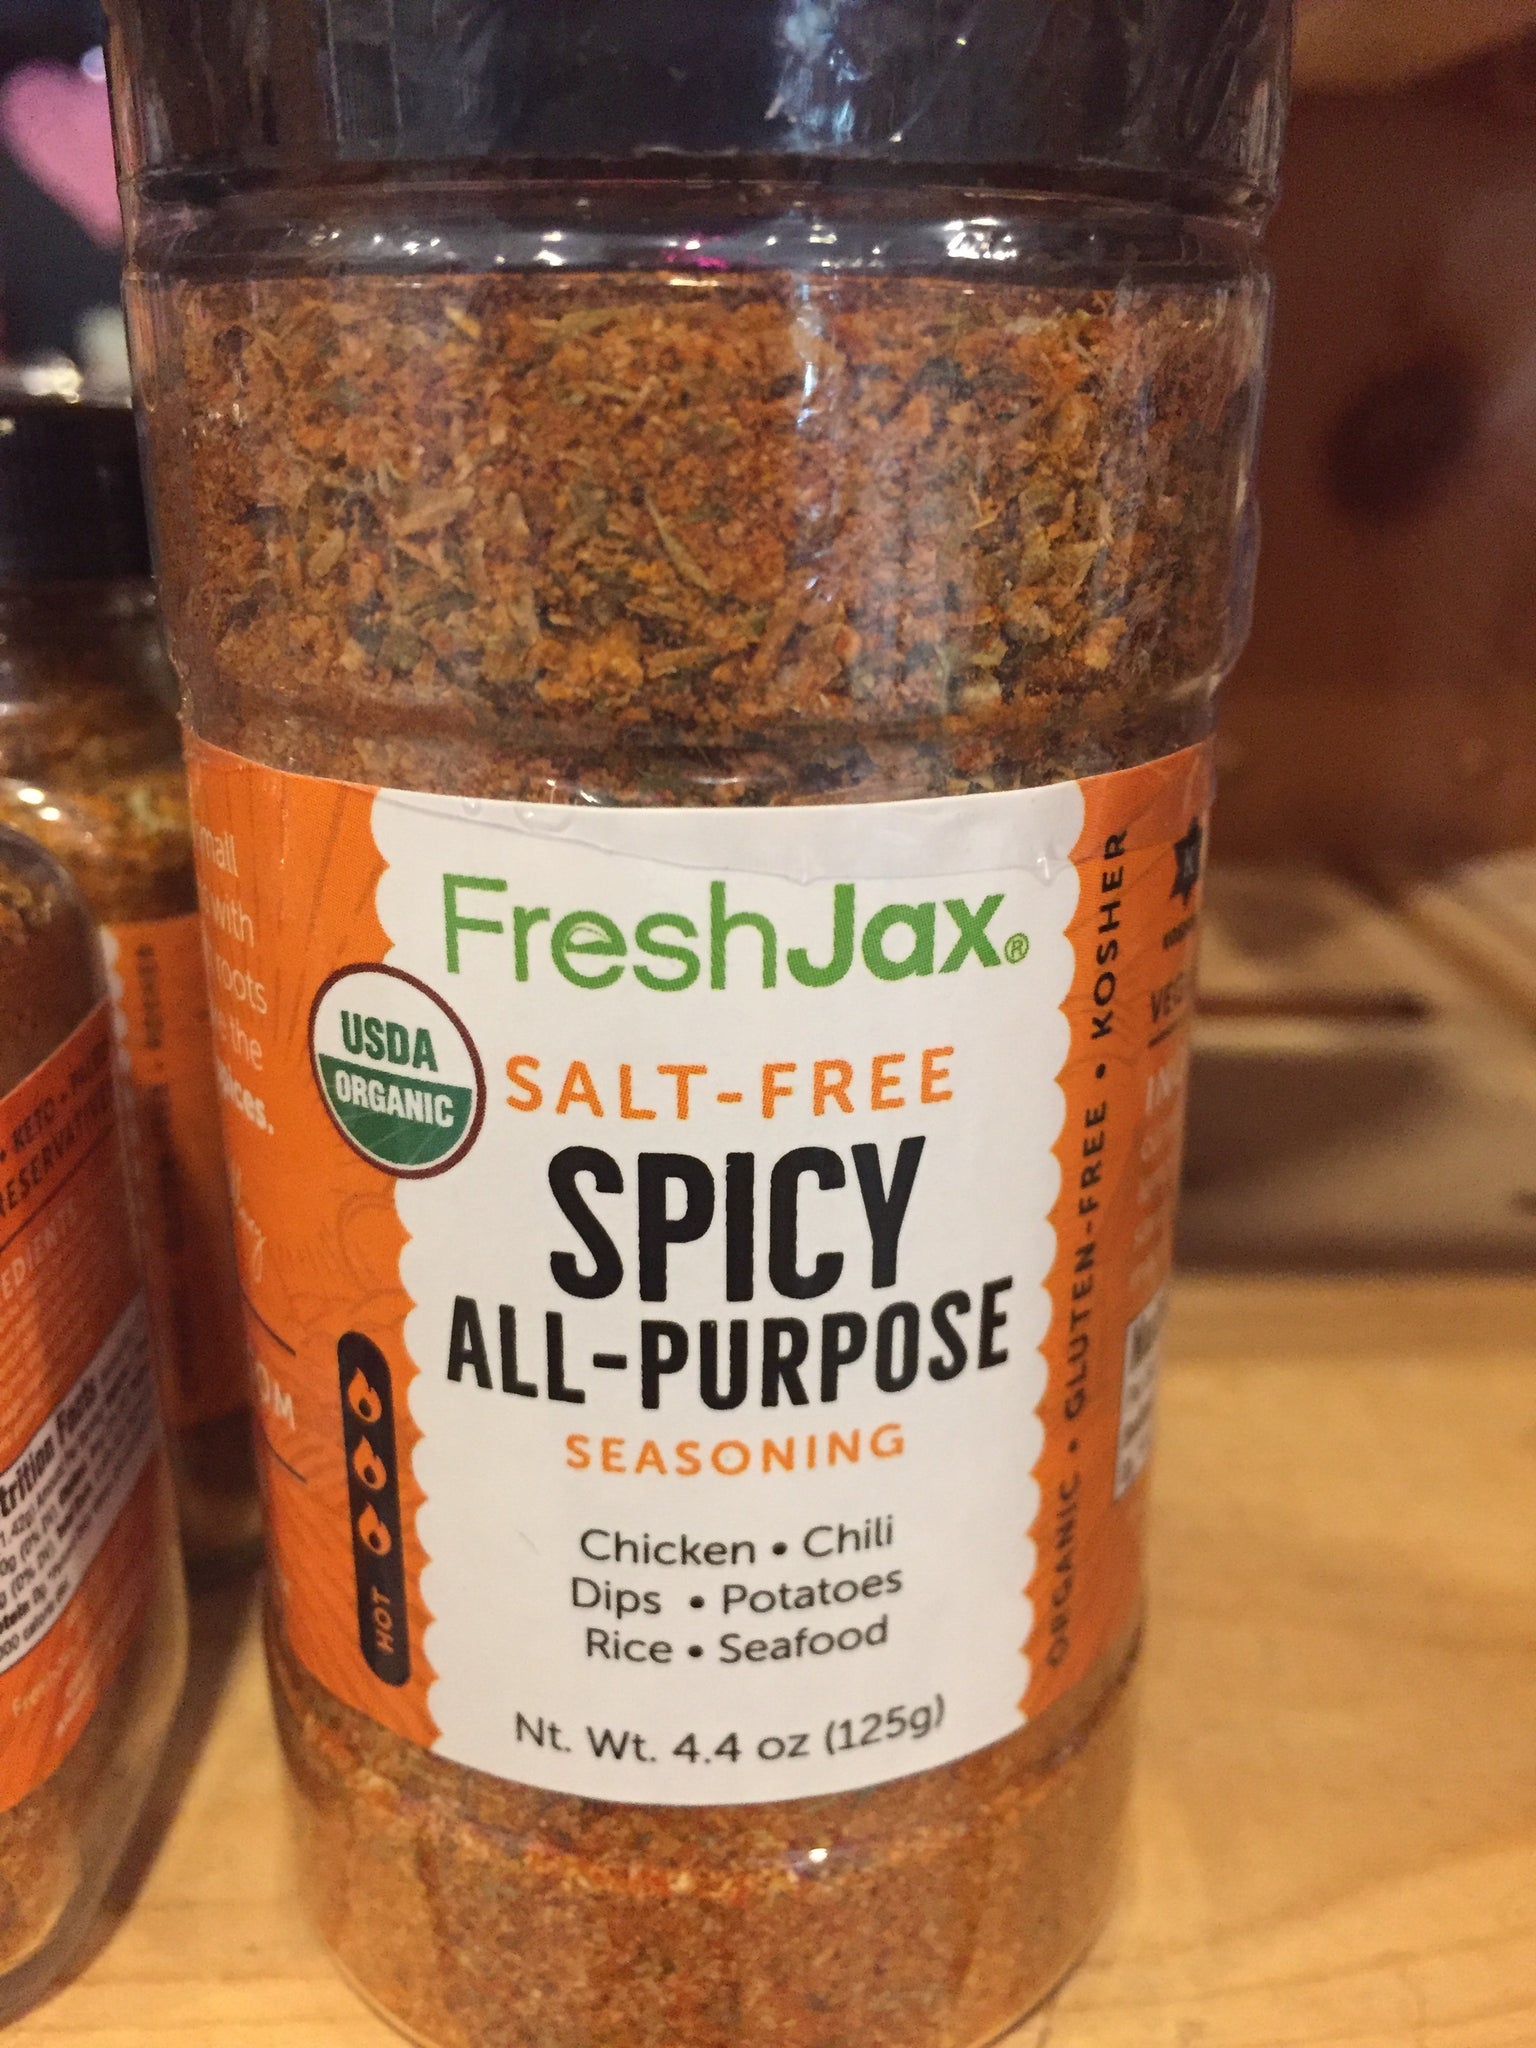 Salt-Free Organic All-Purpose Seasoning